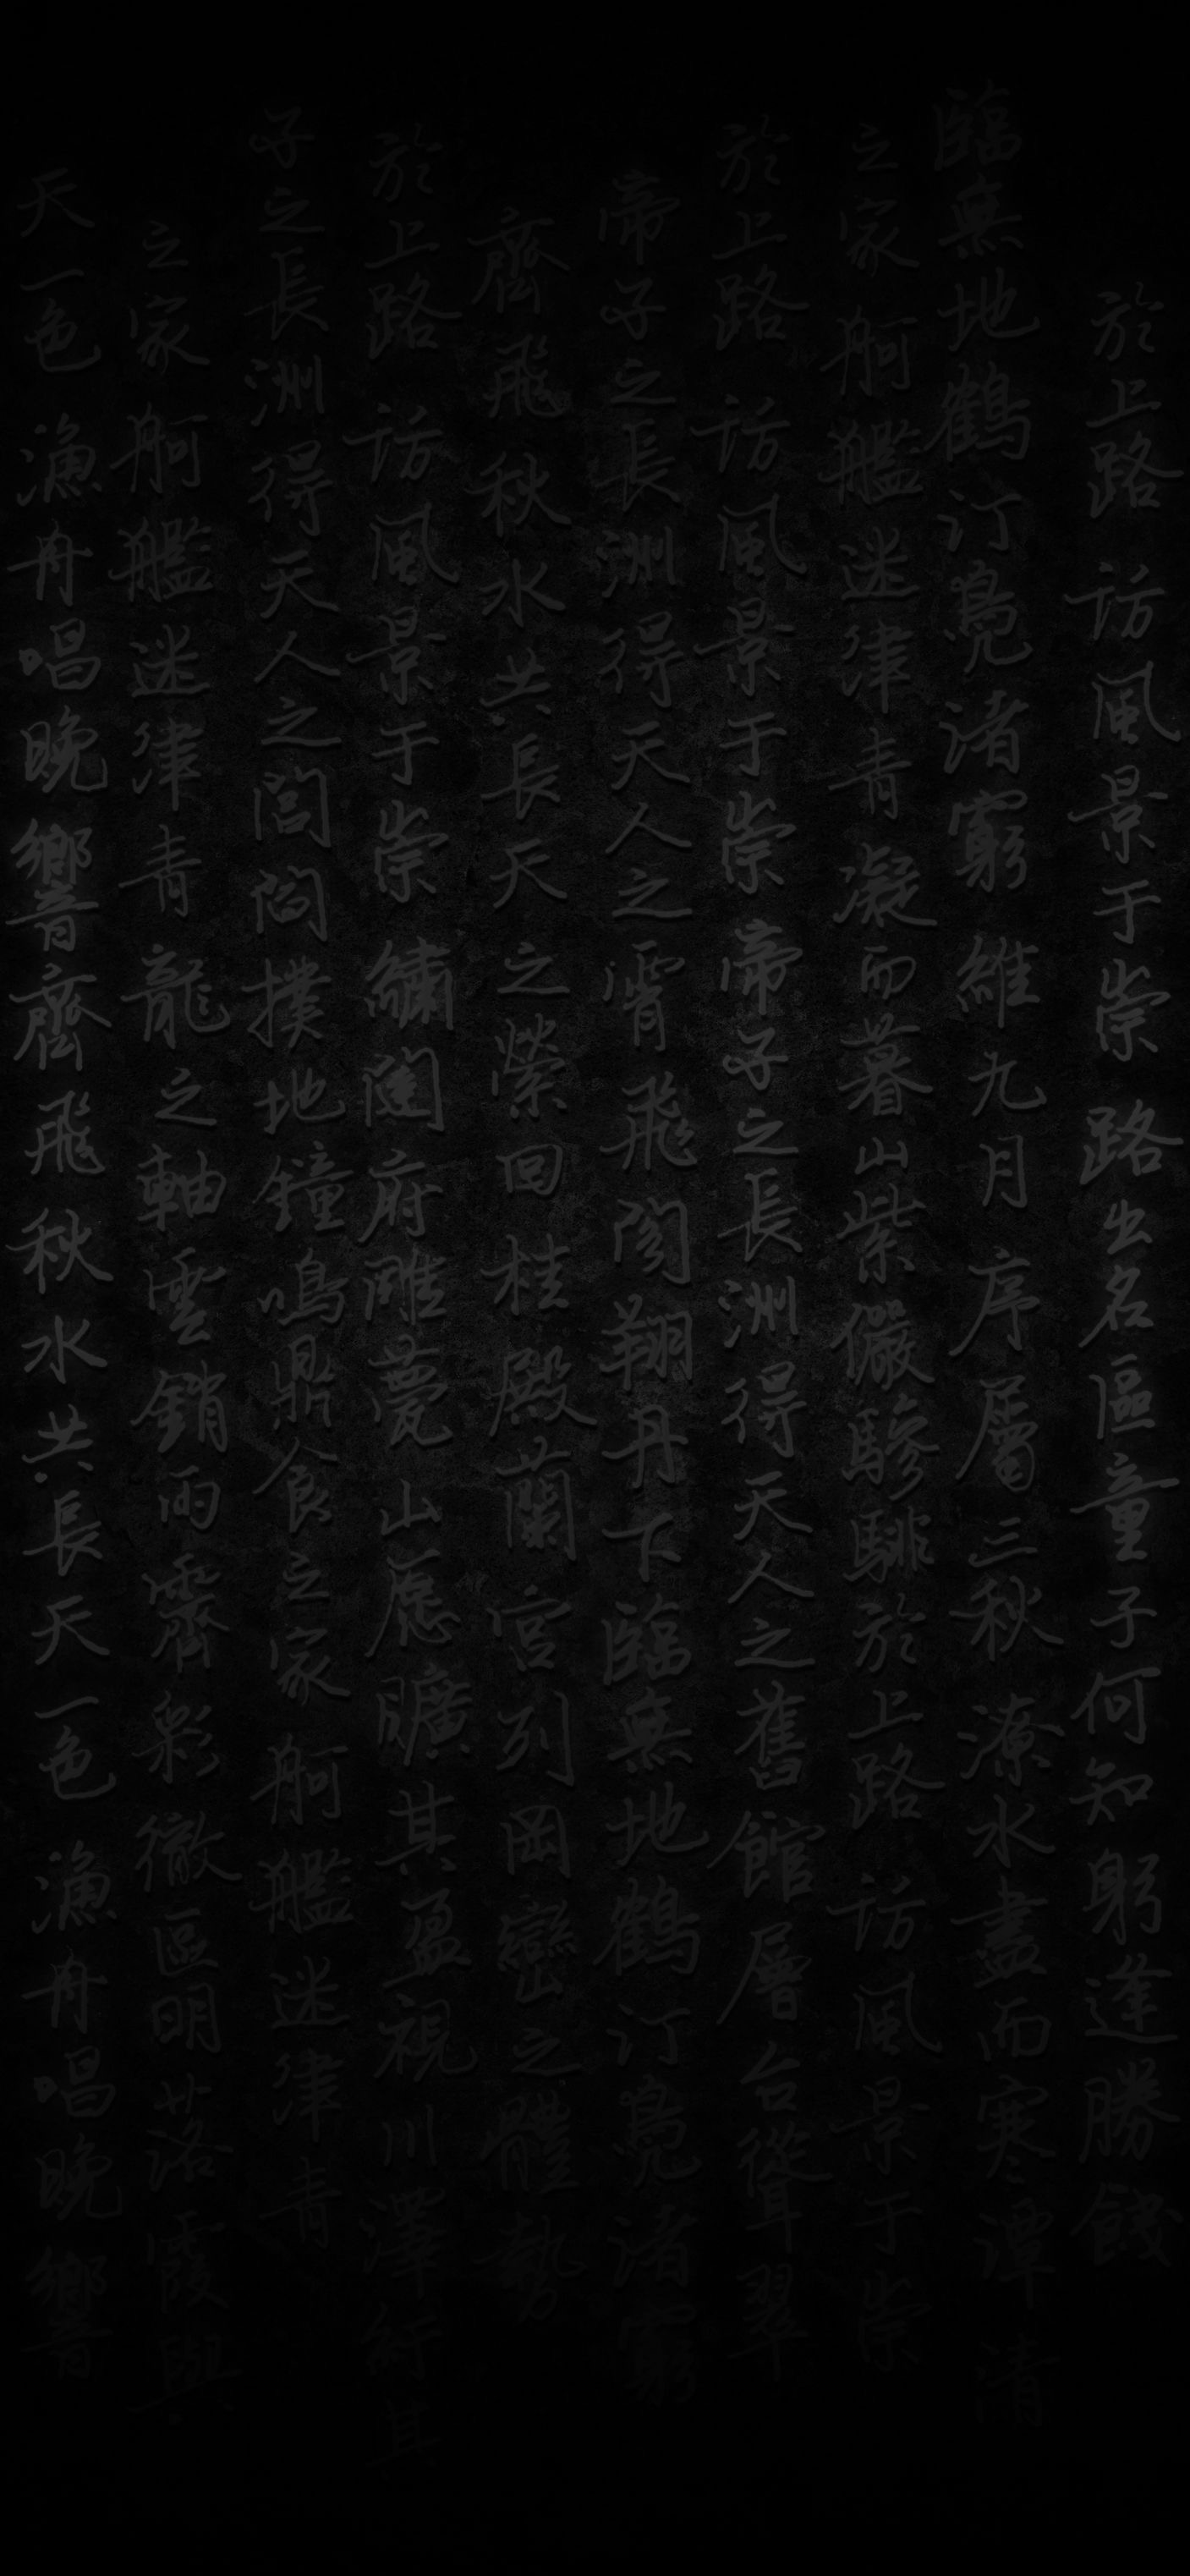 Portrait Display Vertical Digital Art Artwork Text Chinese 1407x3045